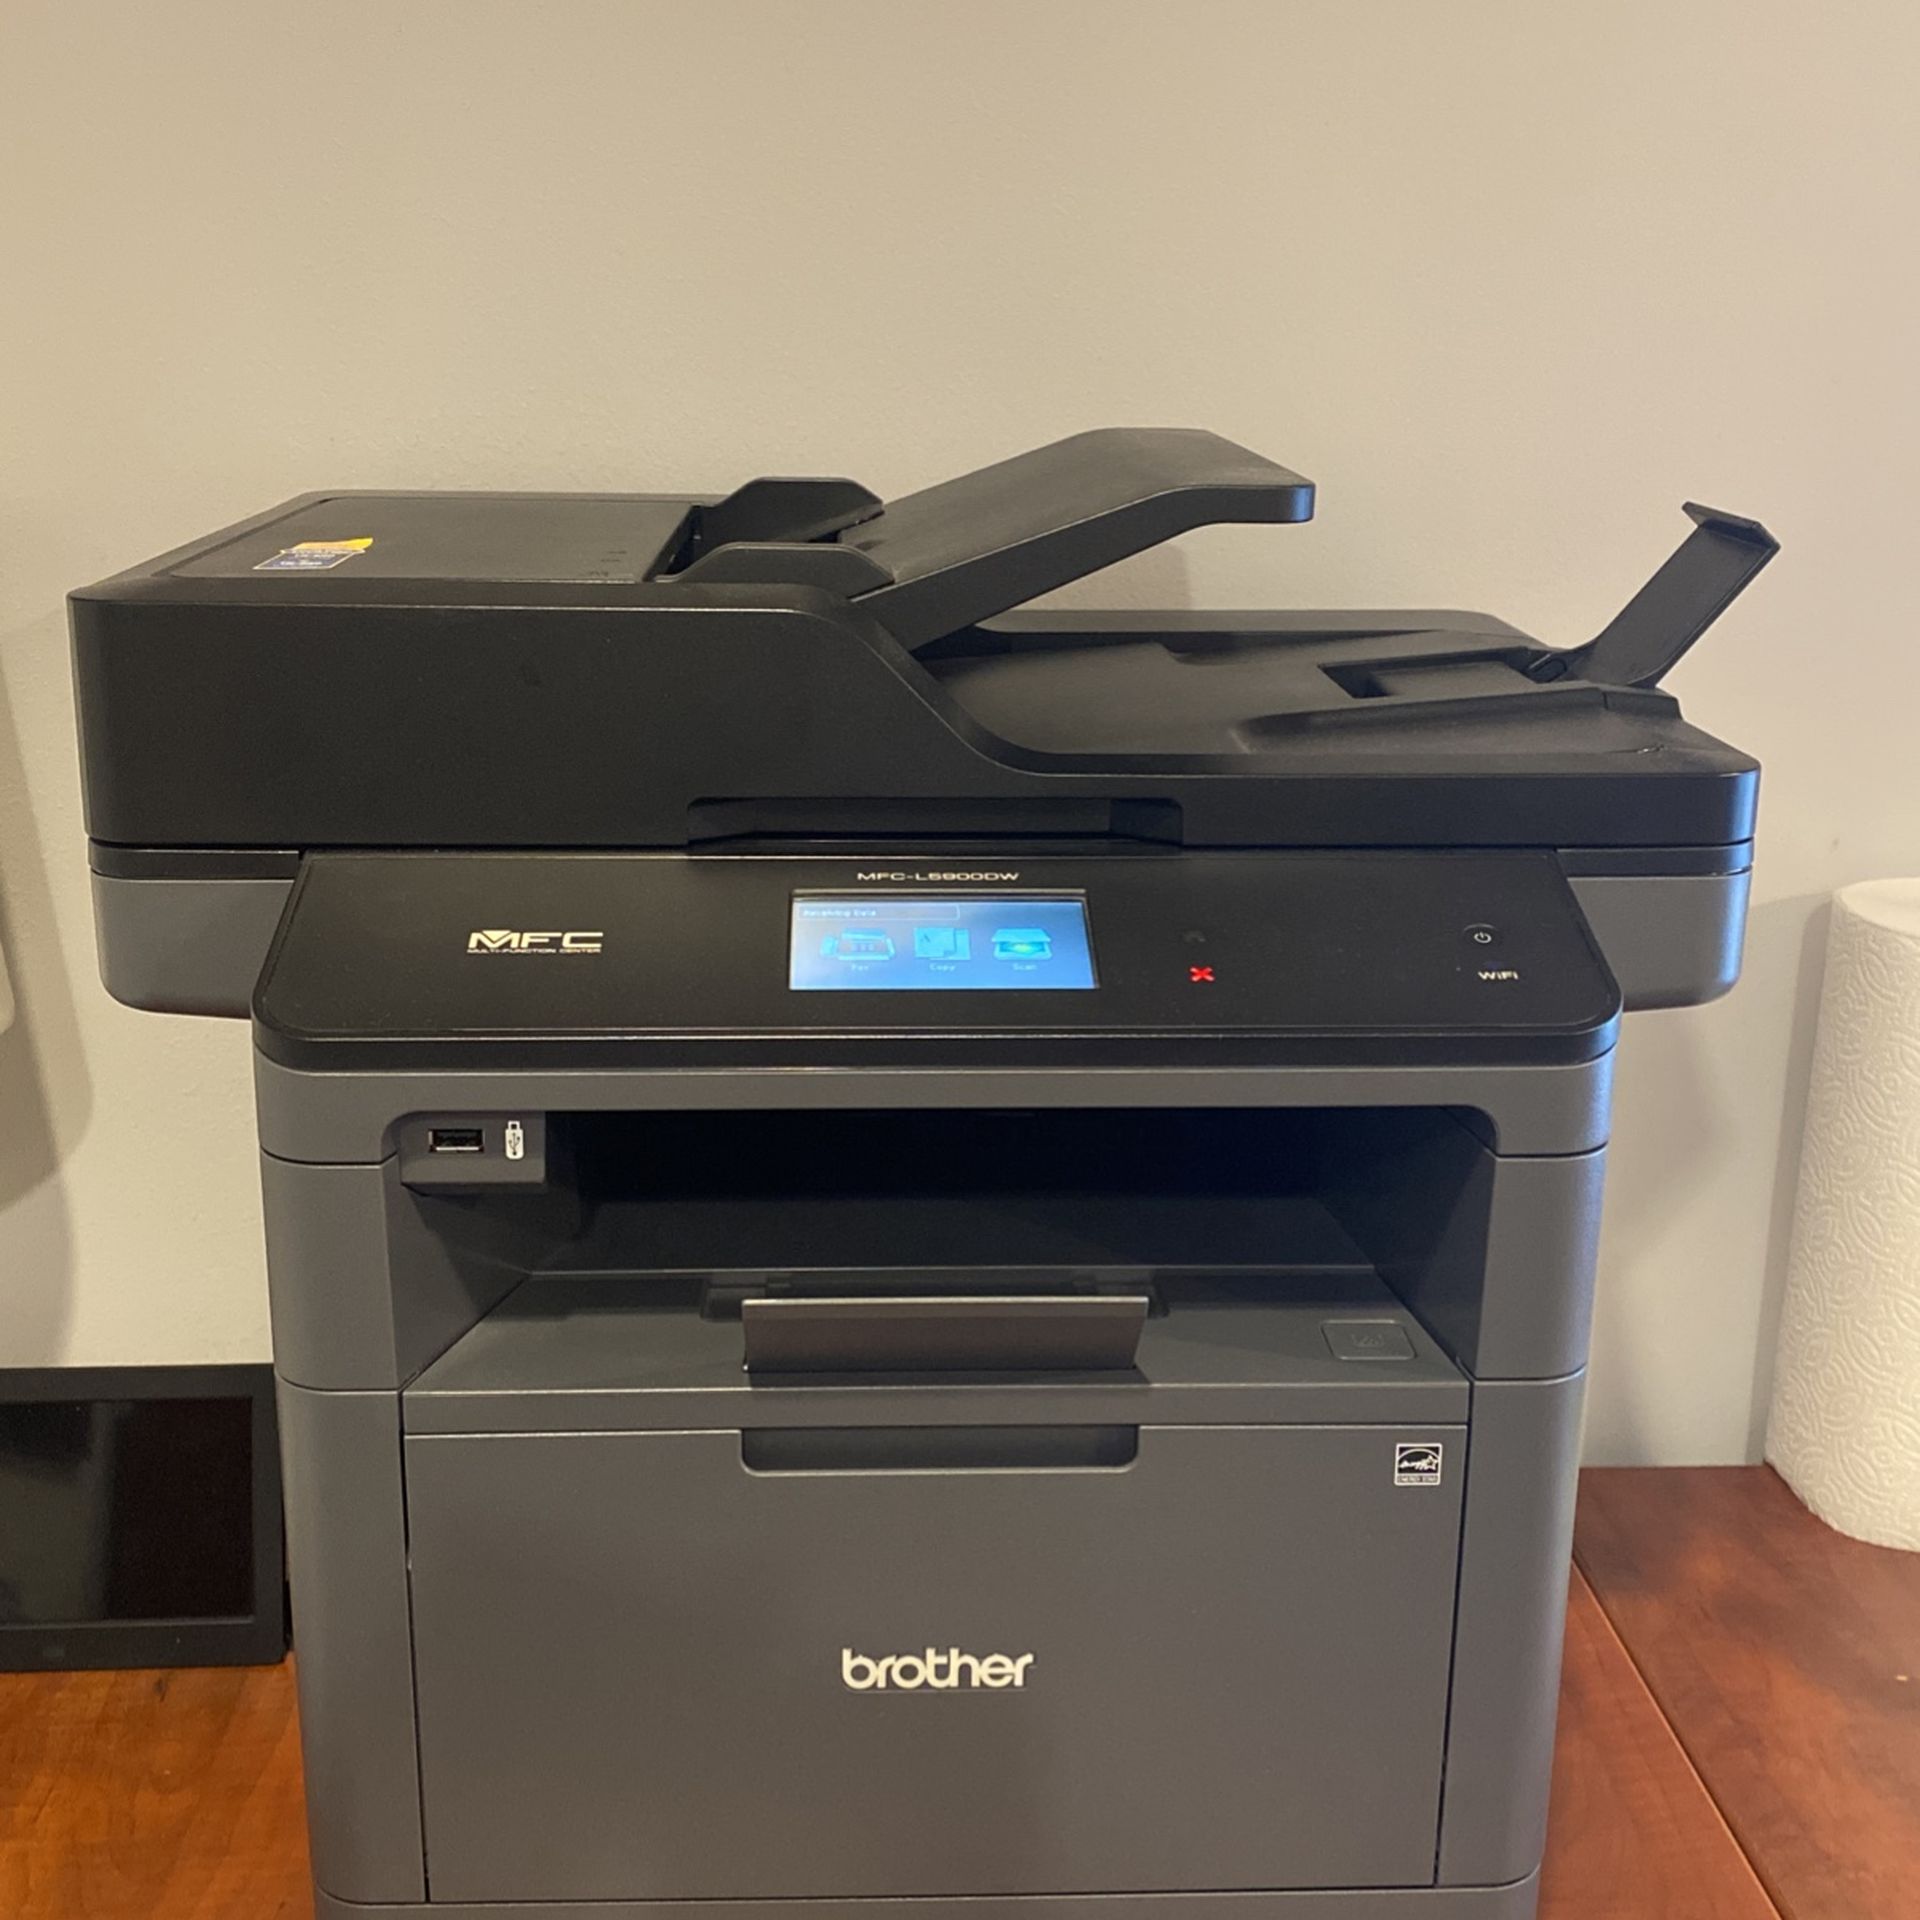 MFC-L5900DW printer for sale